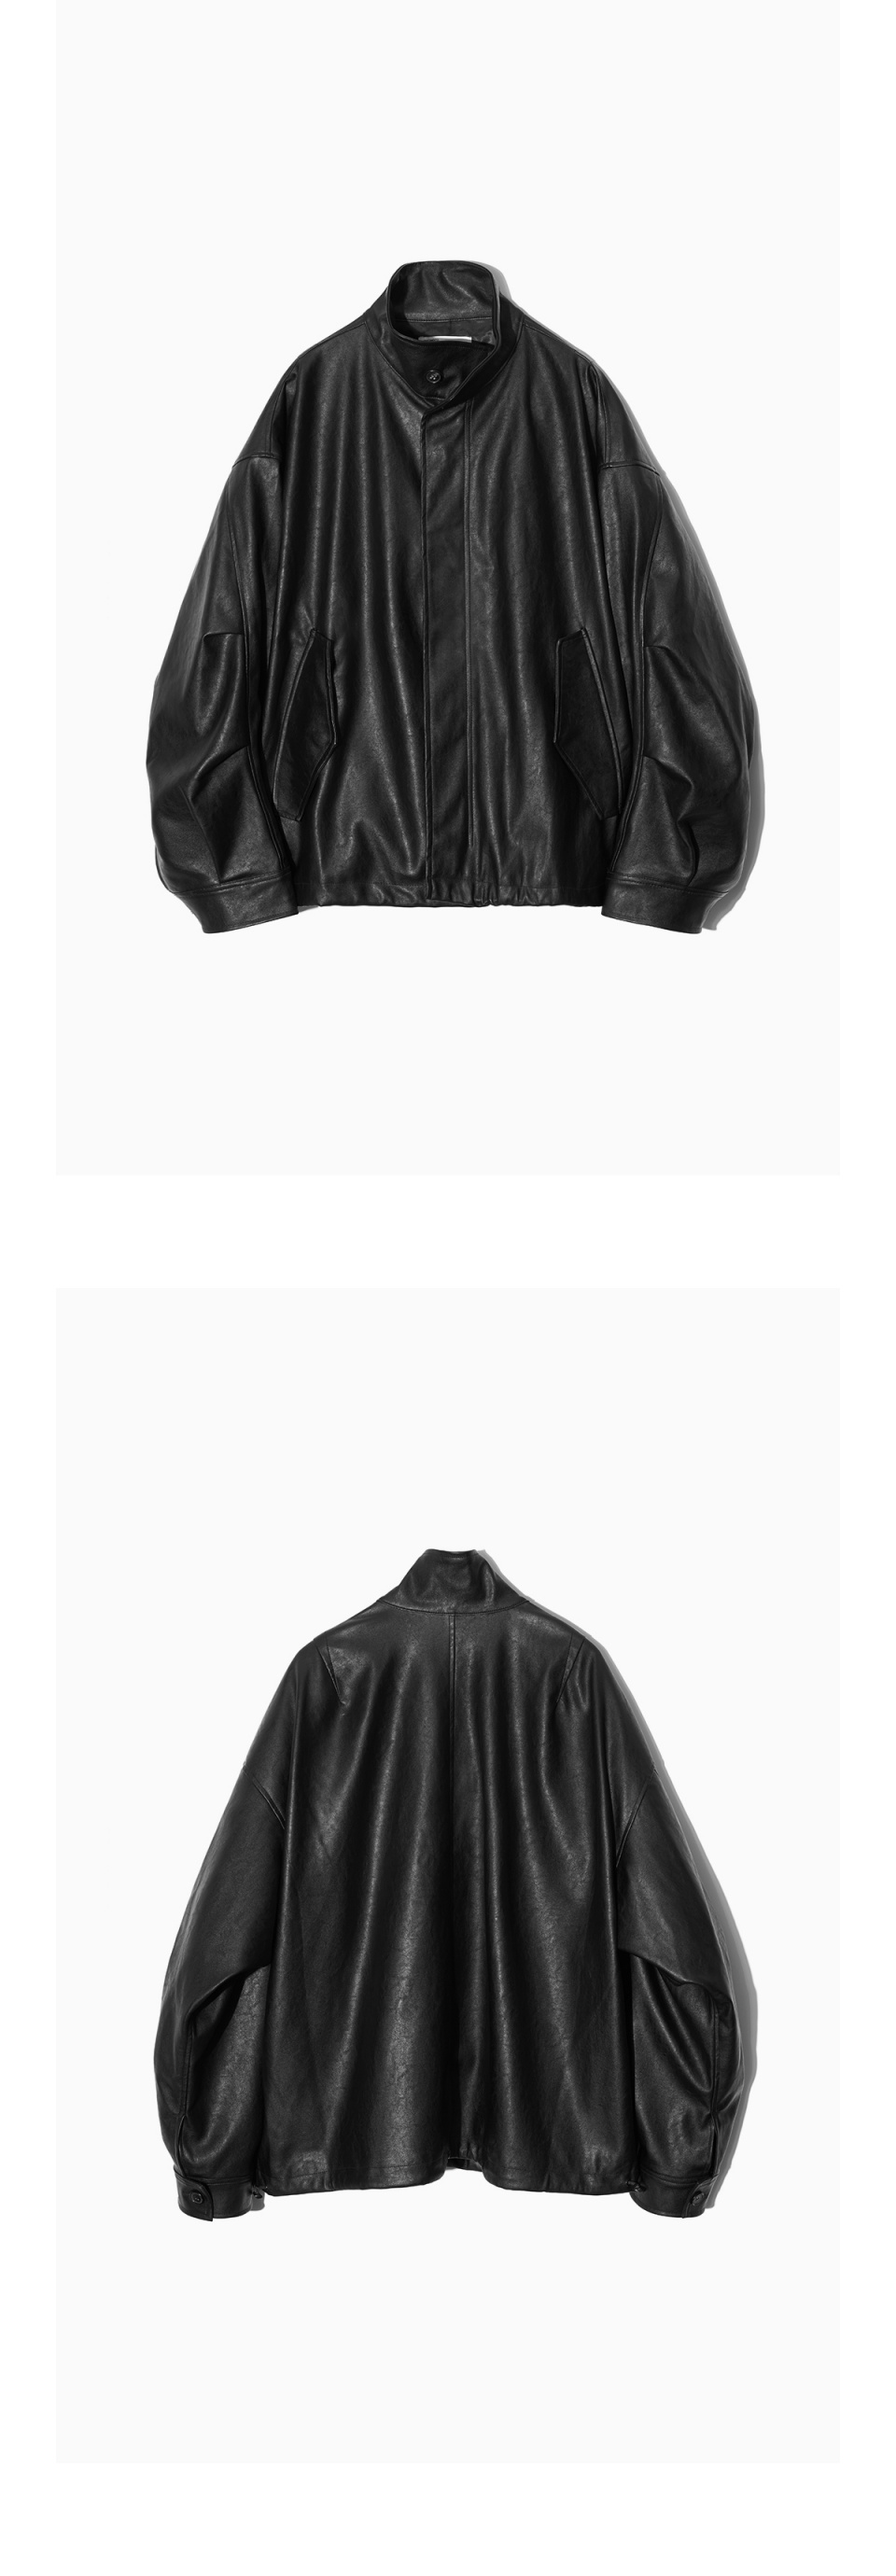 MUSINSA | PARTIMENTO [Vegan Leather] Field Jacket Black